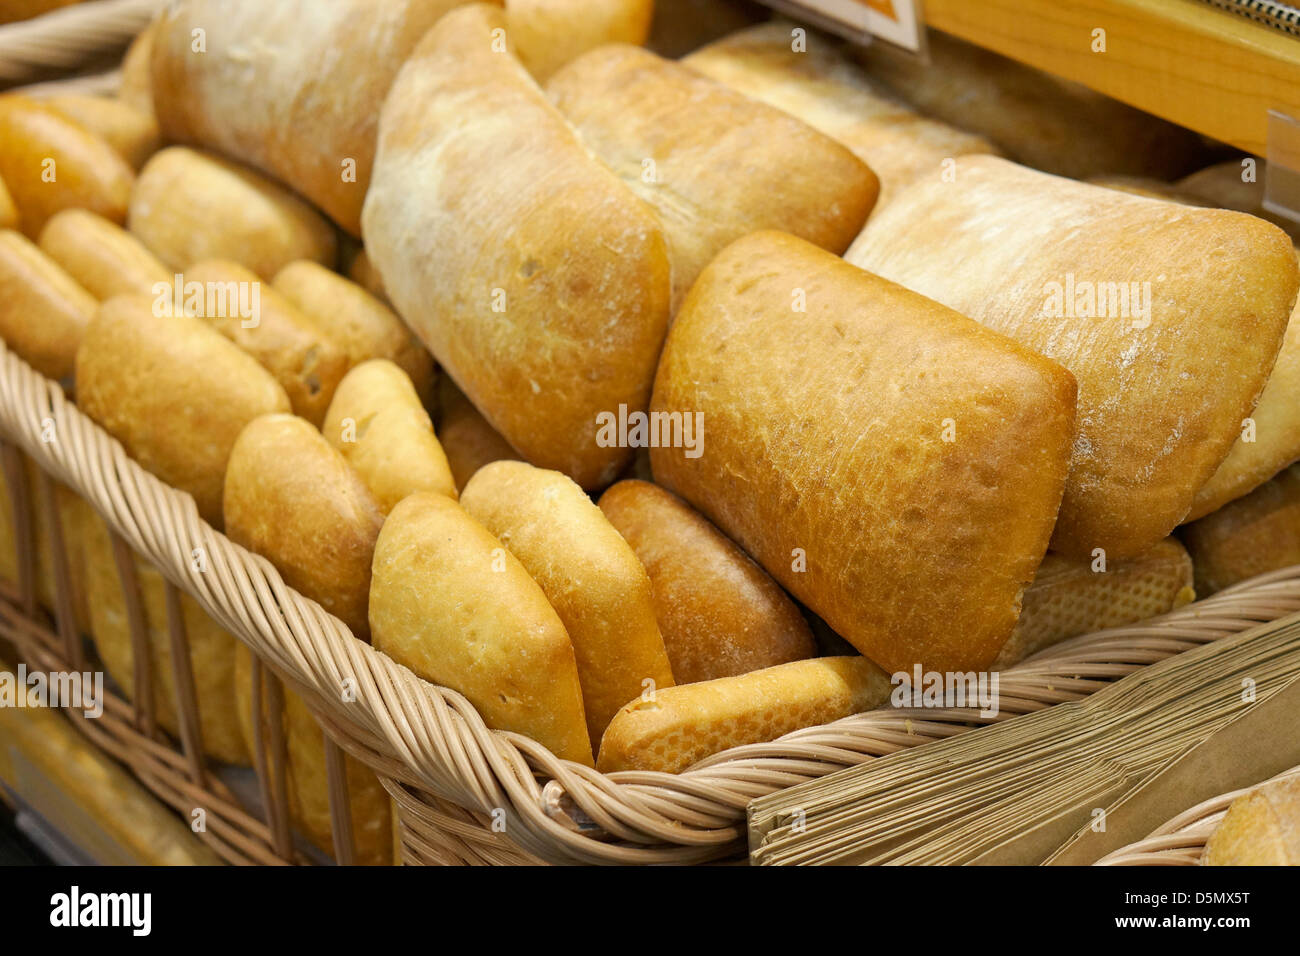 Ciabatta Bread, Loaves, Buns, Rolls of Bread in a Basket Stock Photo